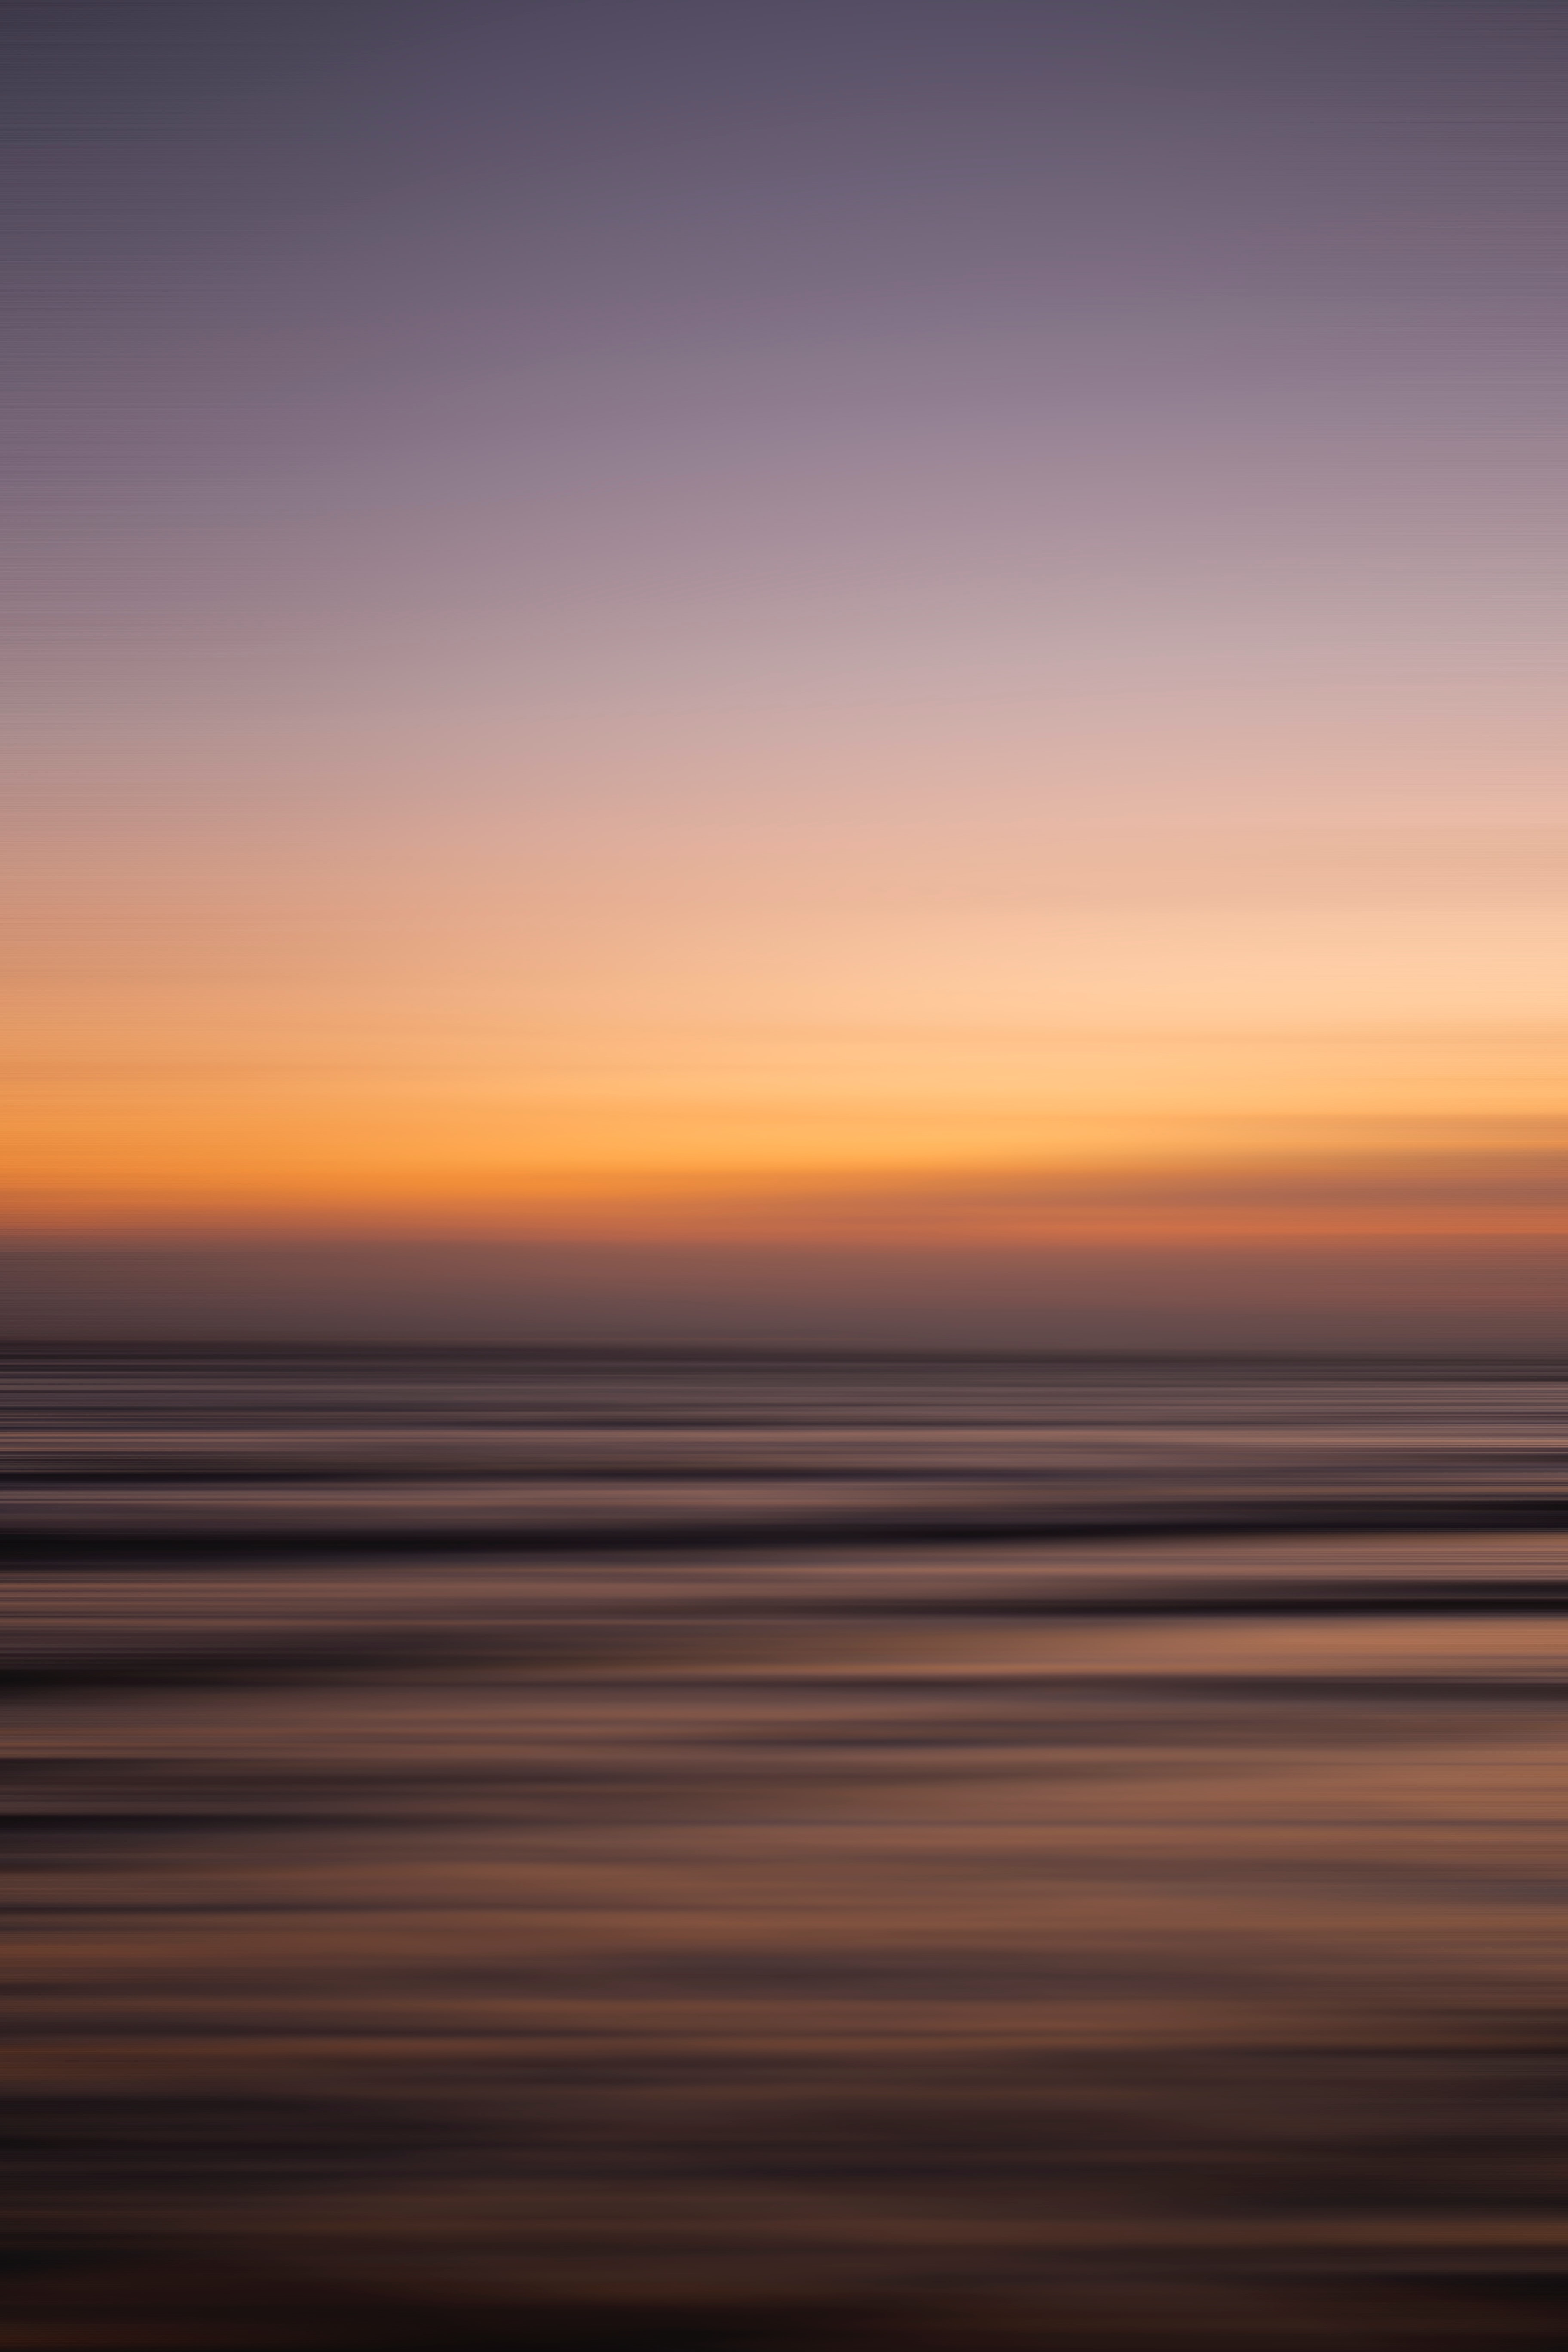 streaks, blur, sunset, abstract, horizon, stripes